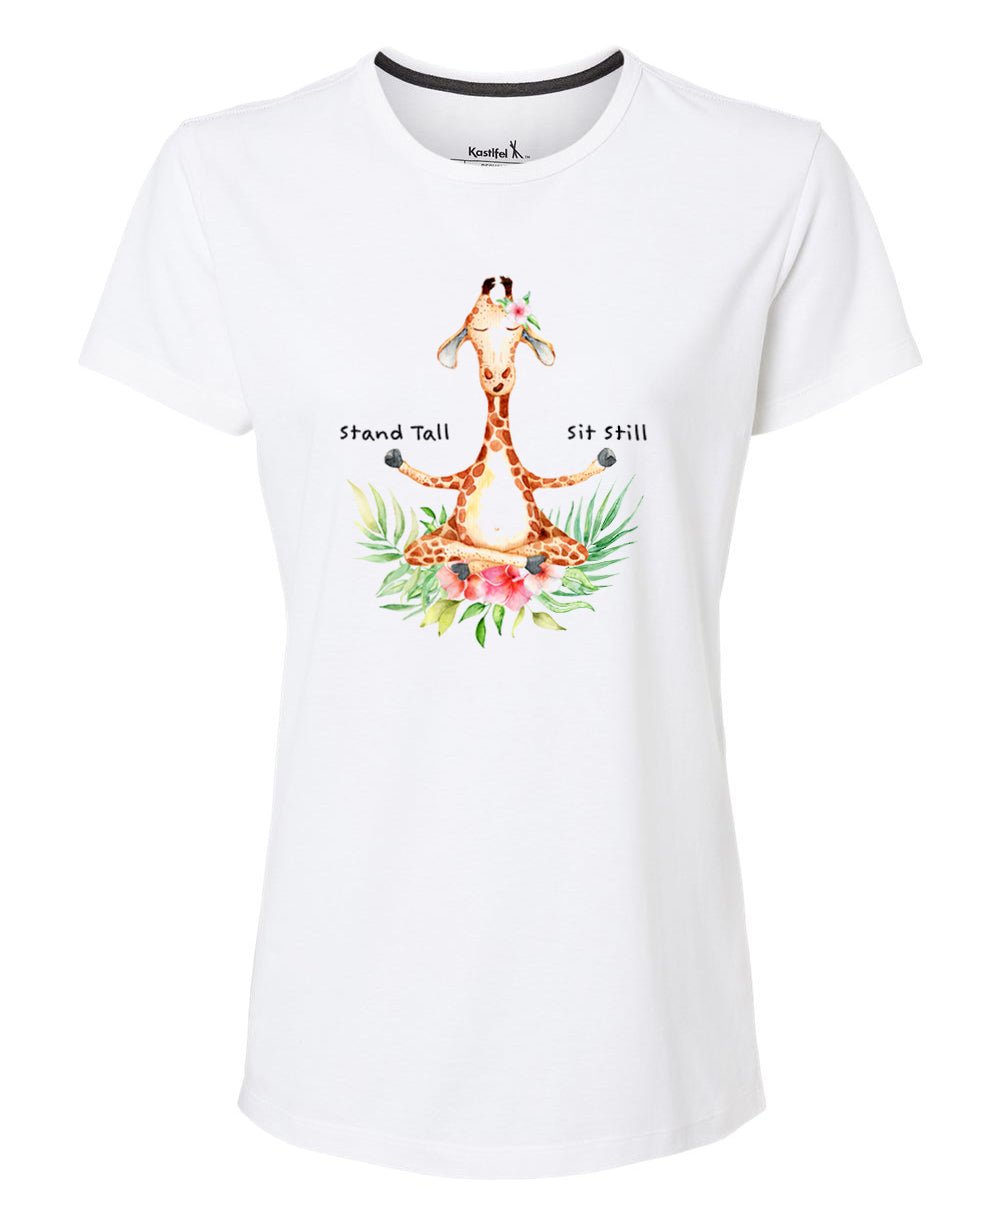 Women's Apparel: Inspirational T-Shirts, Indian Tunics, Yoga